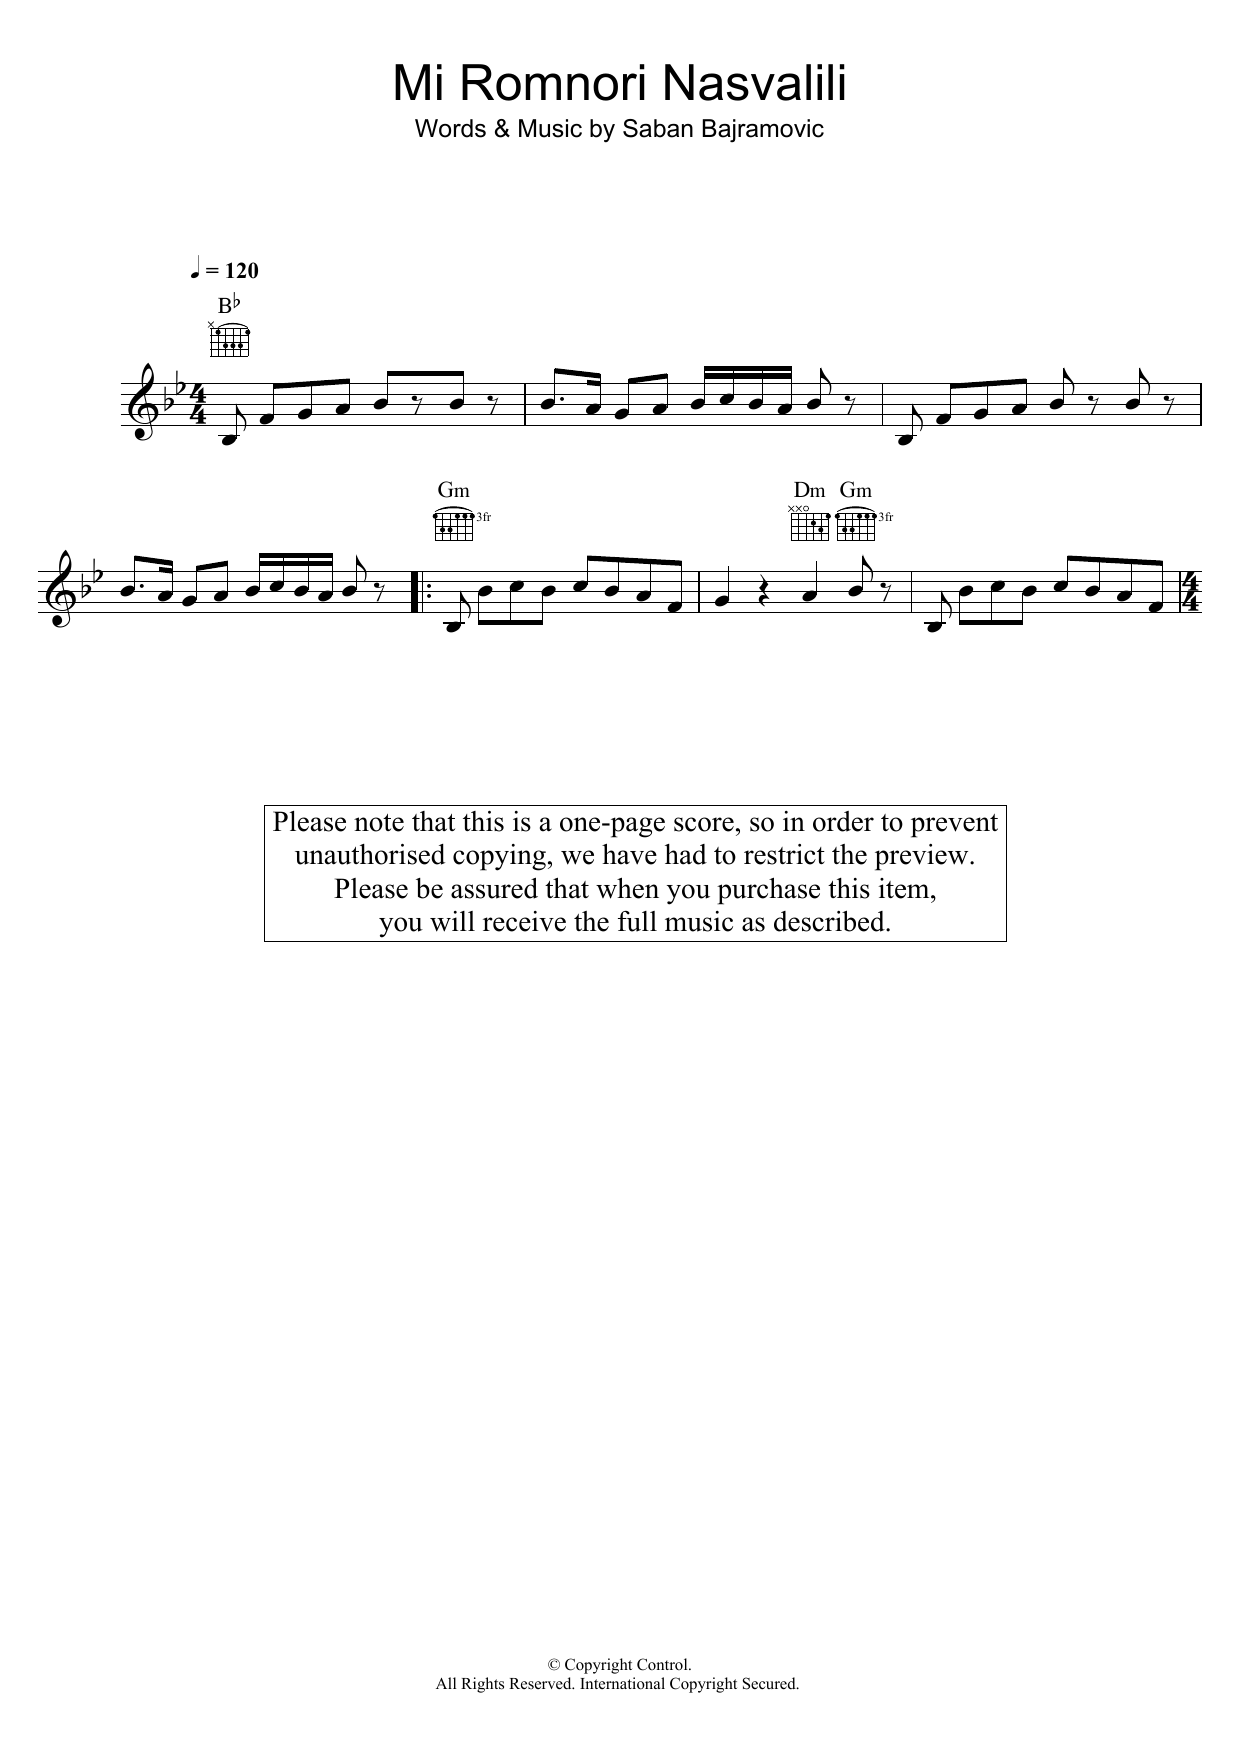 Saban Bajramovic Mi Romnori Nasvalili sheet music notes and chords arranged for Lead Sheet / Fake Book